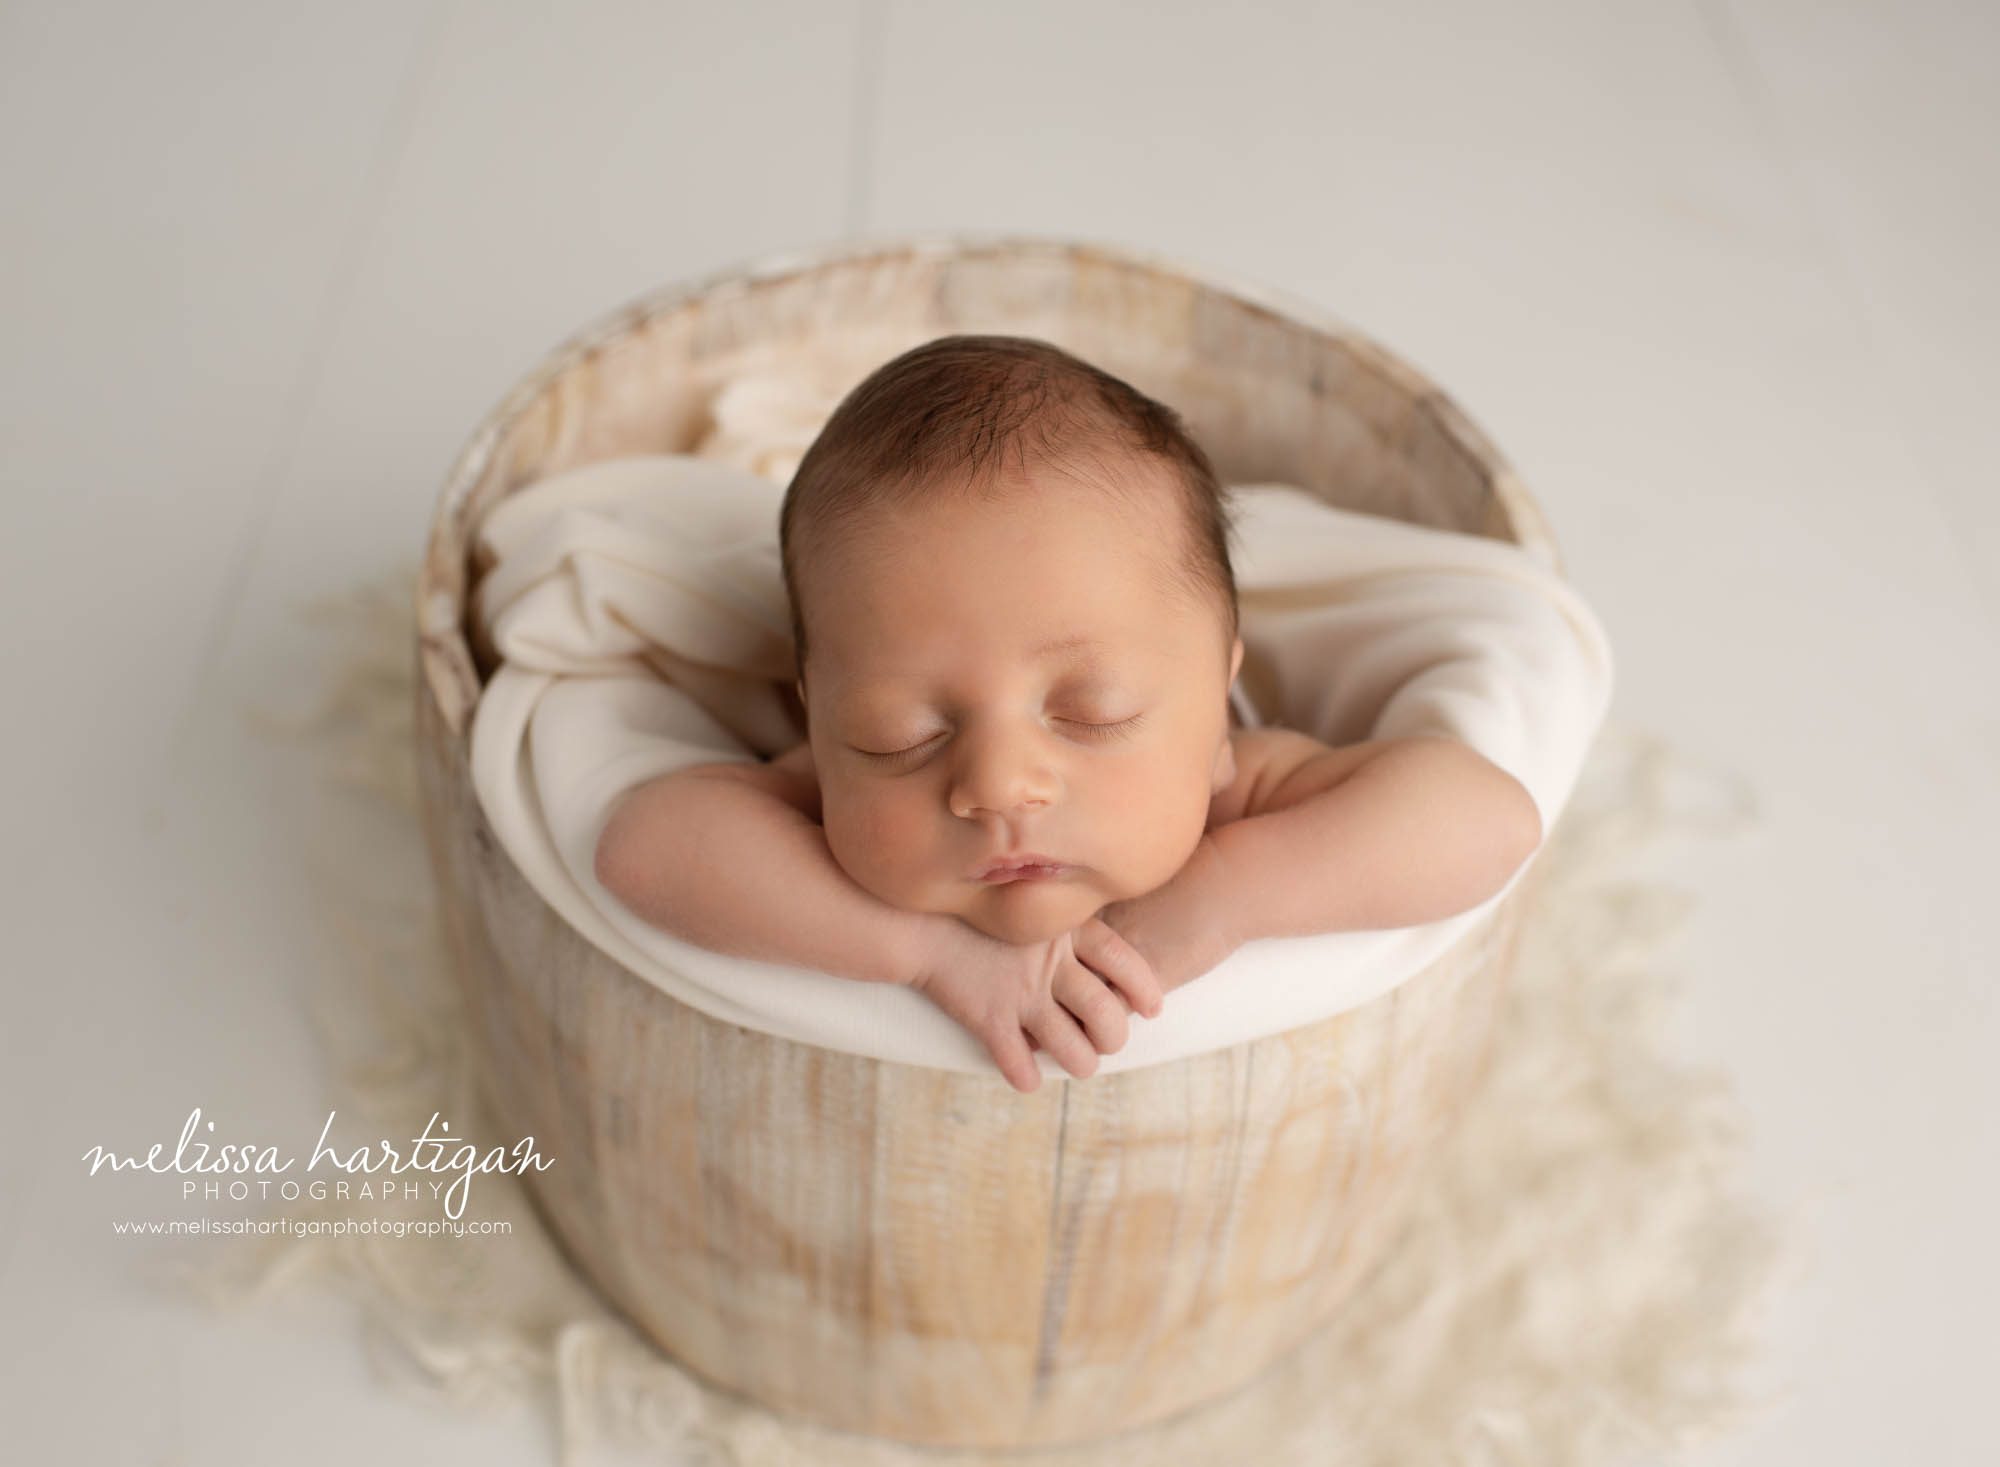 newborn baby boy posed in wooden barrel with cream wrap newborn photography CT